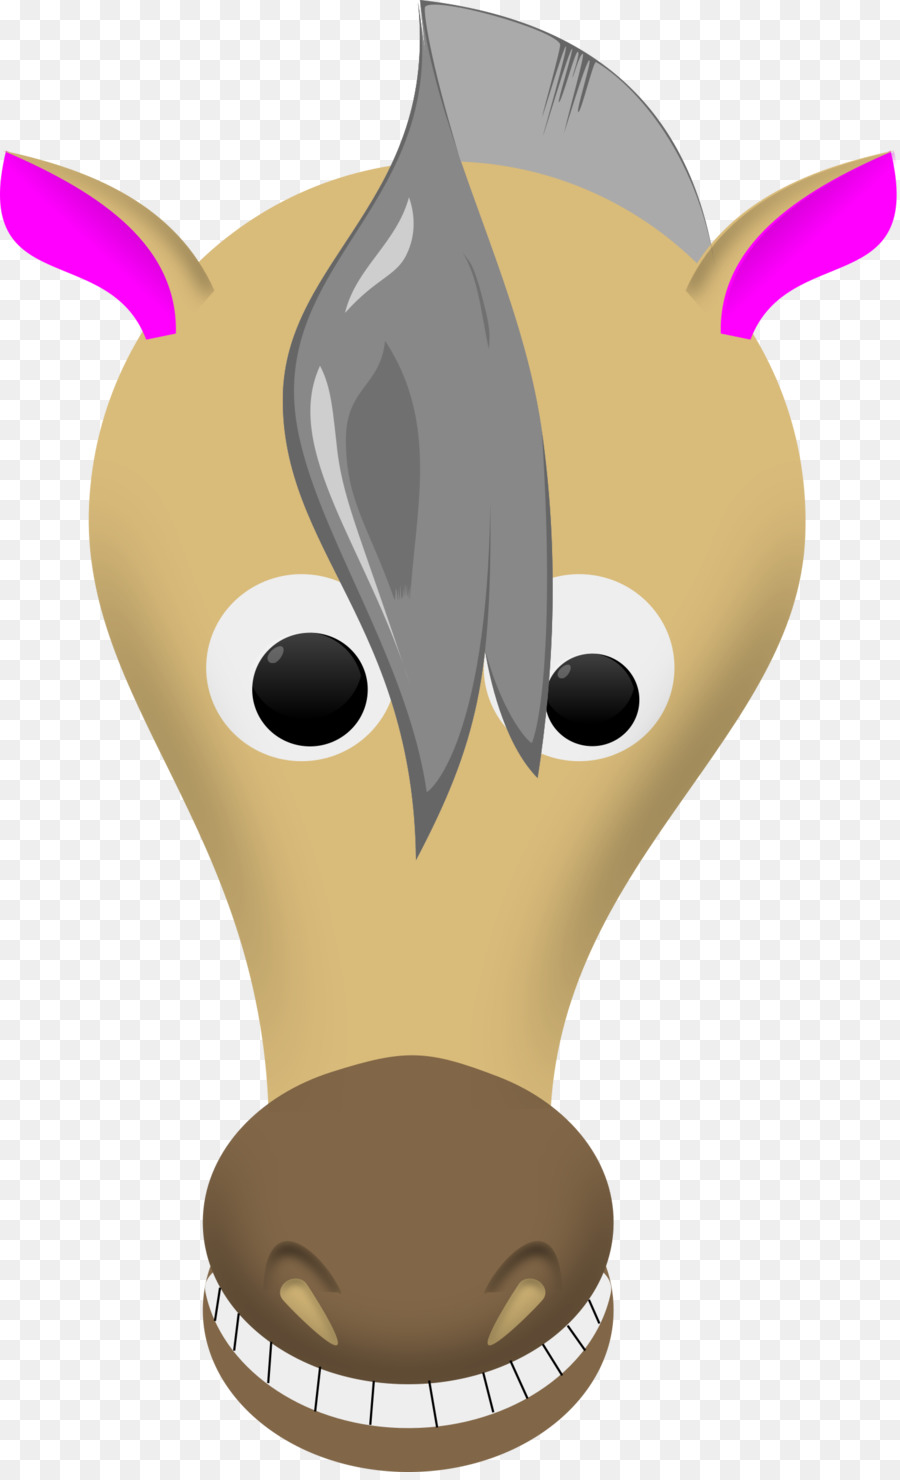 Gambar Kepala Unicorn Kartun - kumpulan gambarku